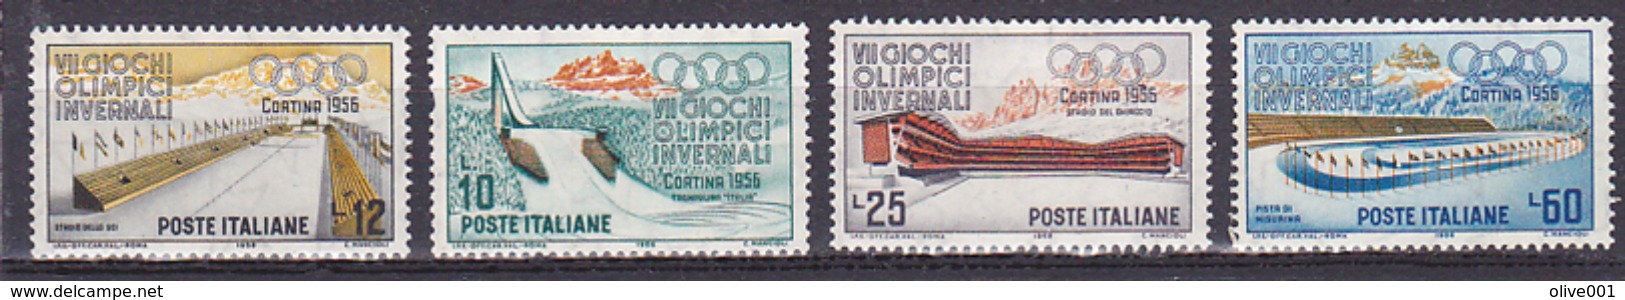 Italie Serie De 4 TP Y&T N° 720 / 23 MNH ** Cote 5 € - Winter 1956: Cortina D'Ampezzo